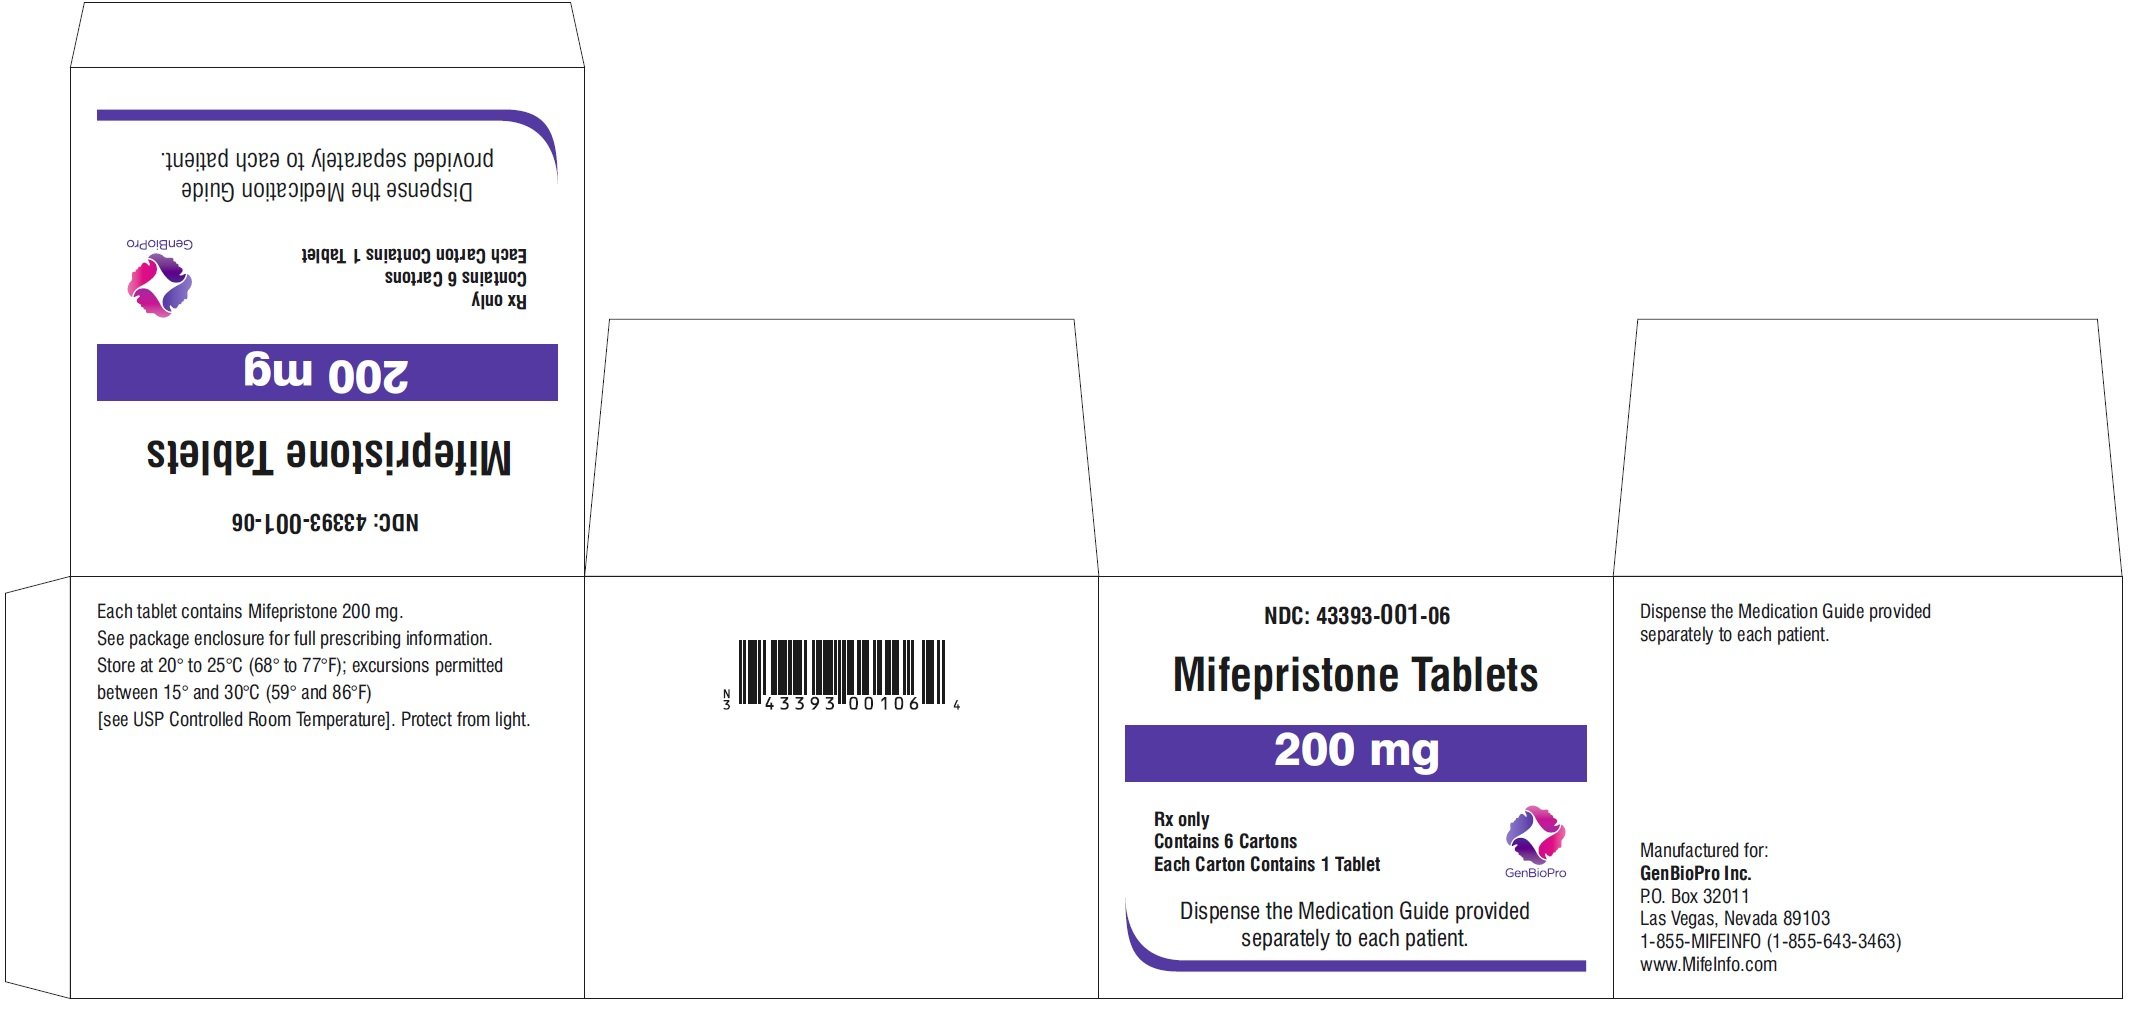 Box Label Image 200 mg